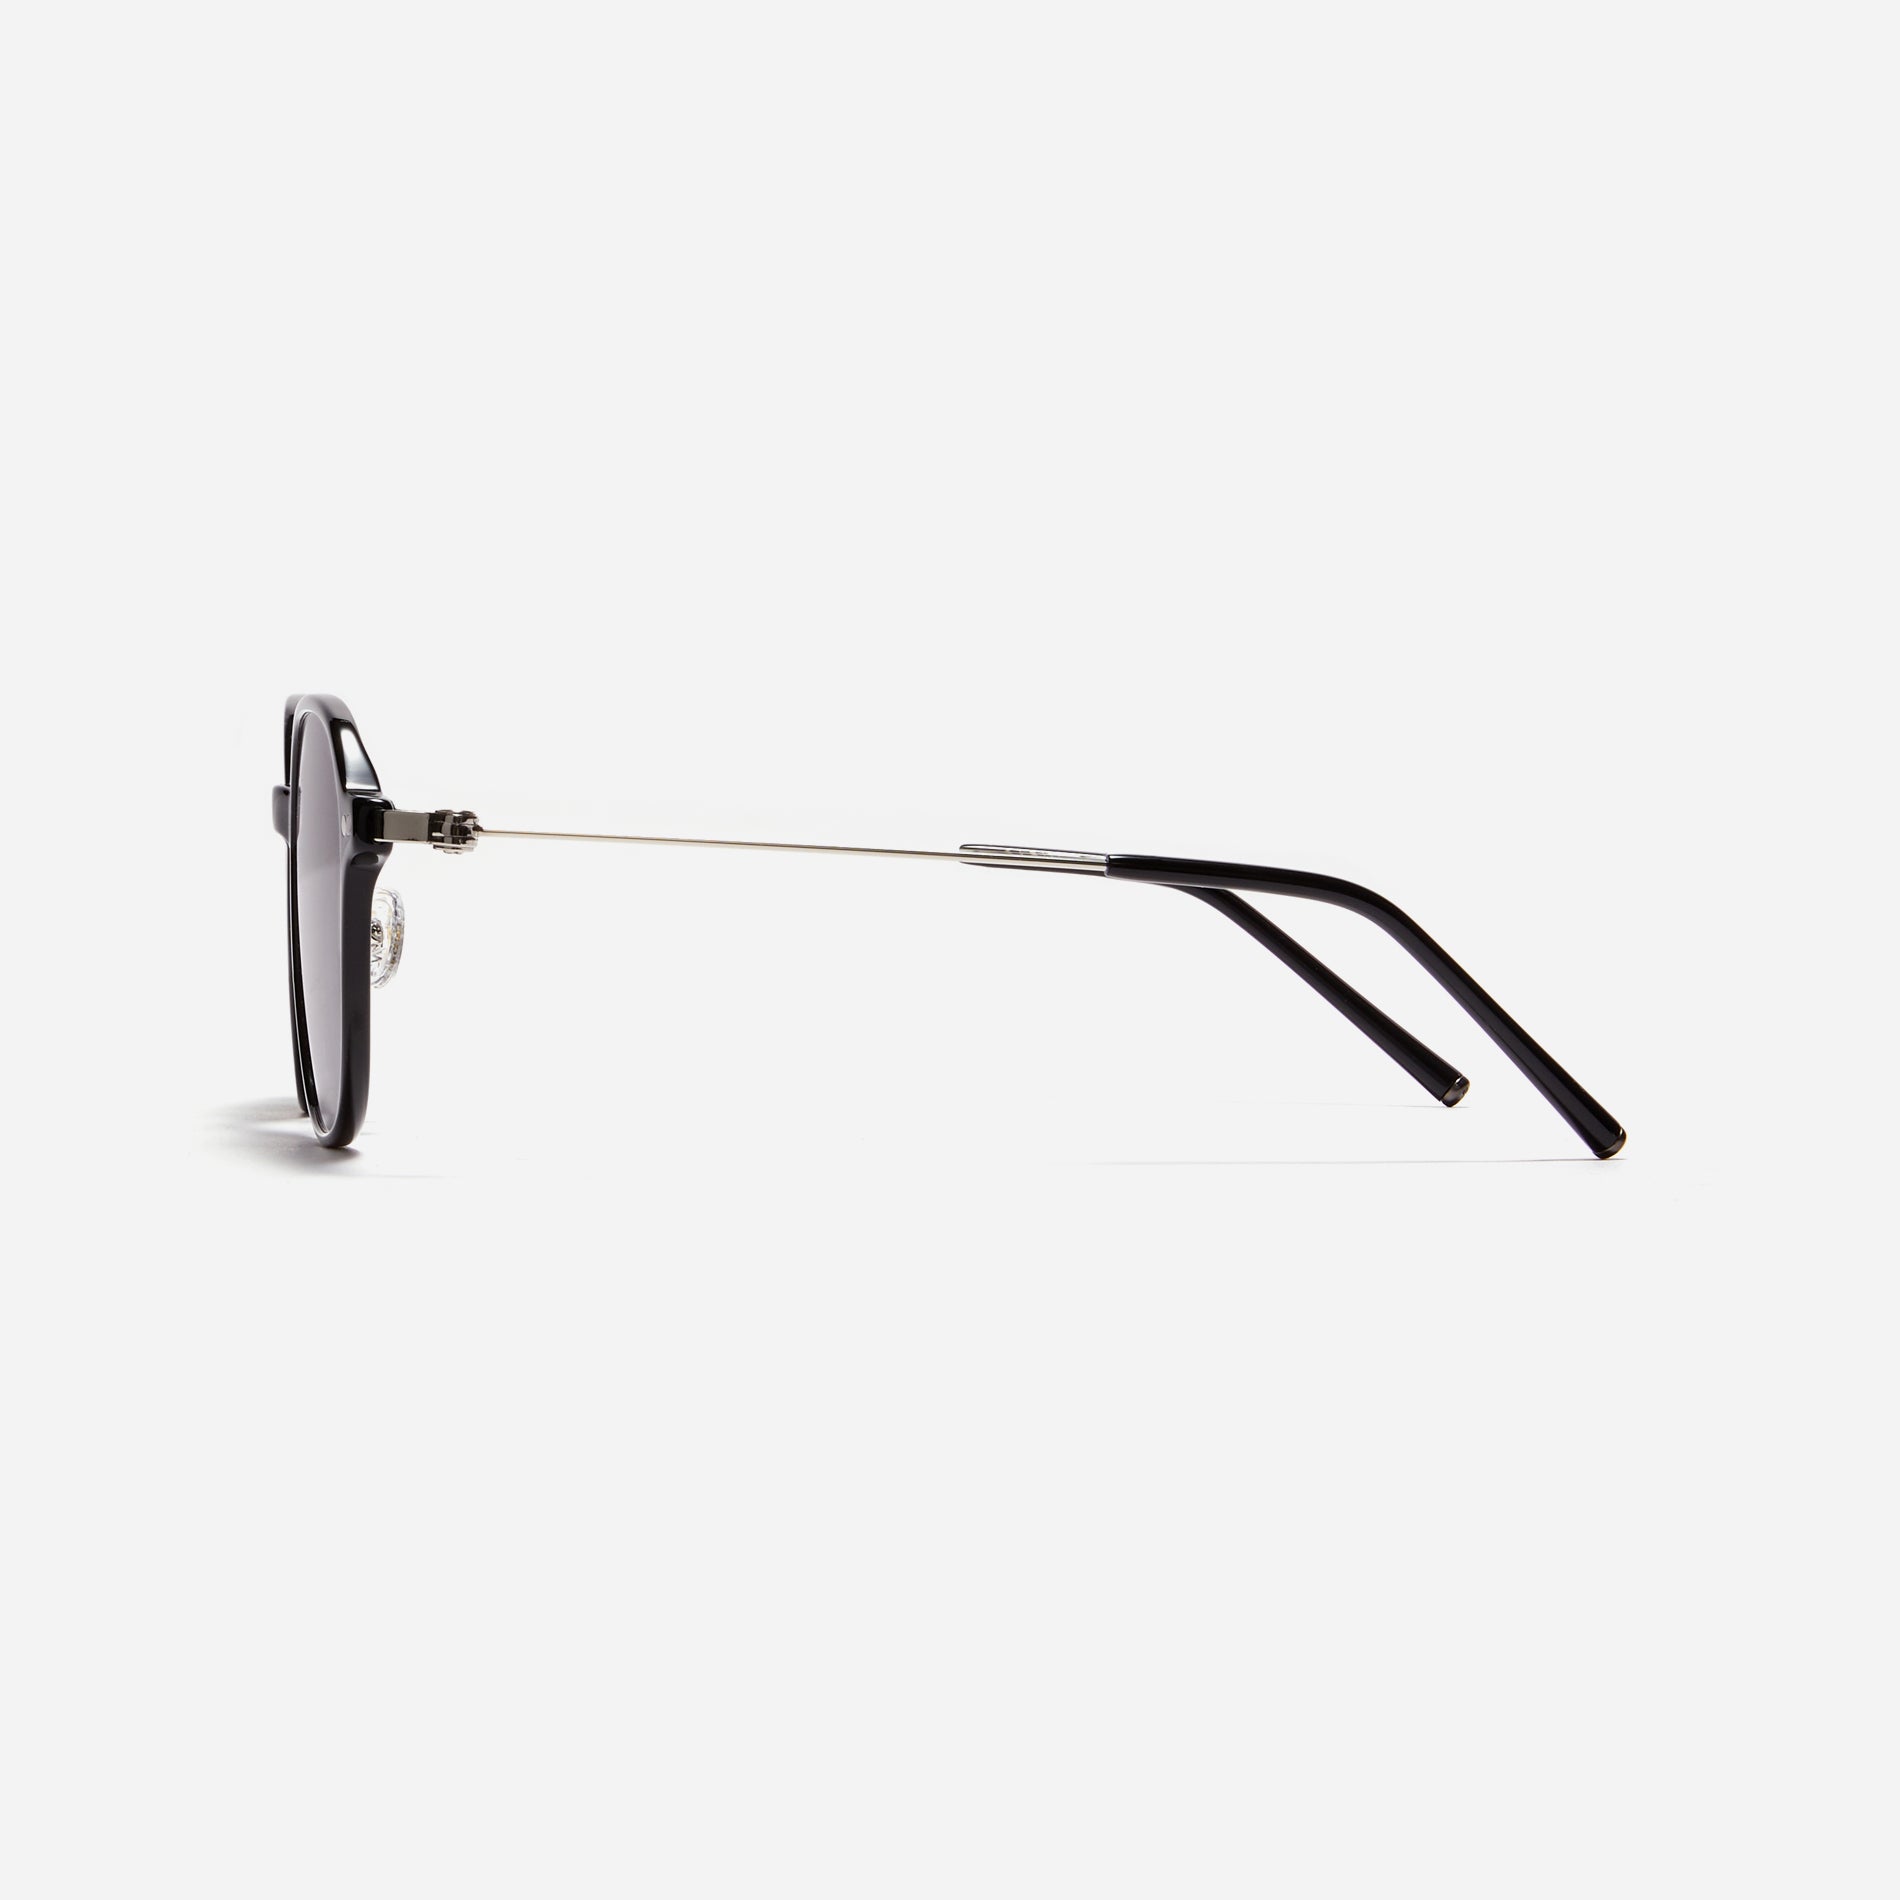 Polygonal-shaped combination sunglasses featuring oversized retro frame.